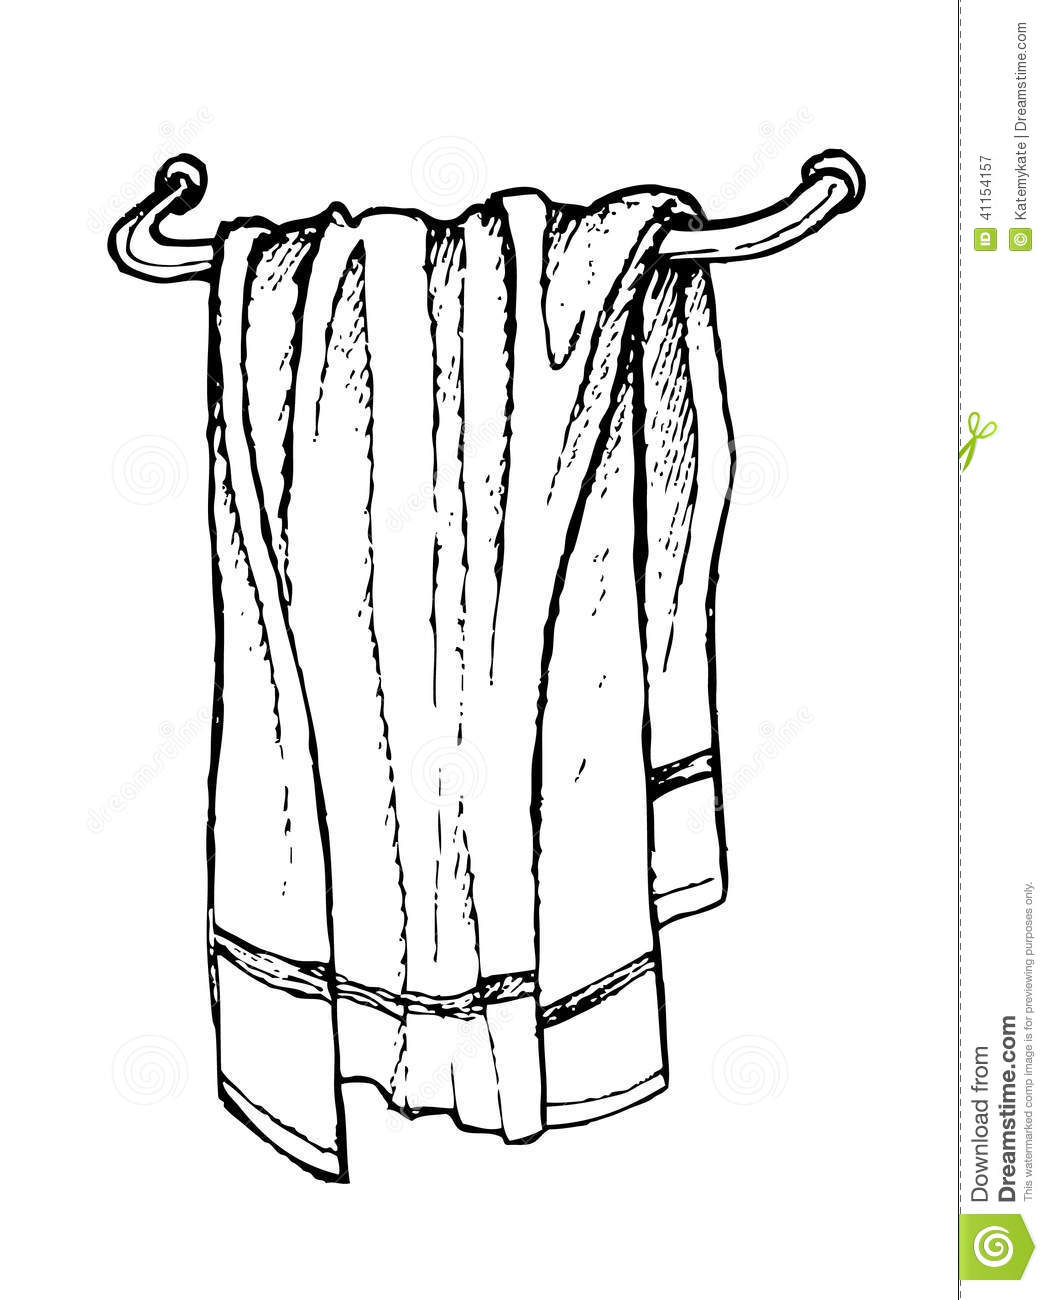 Hand Drawn Bath Towel  Line Art Stock Illustration   Image  41154157